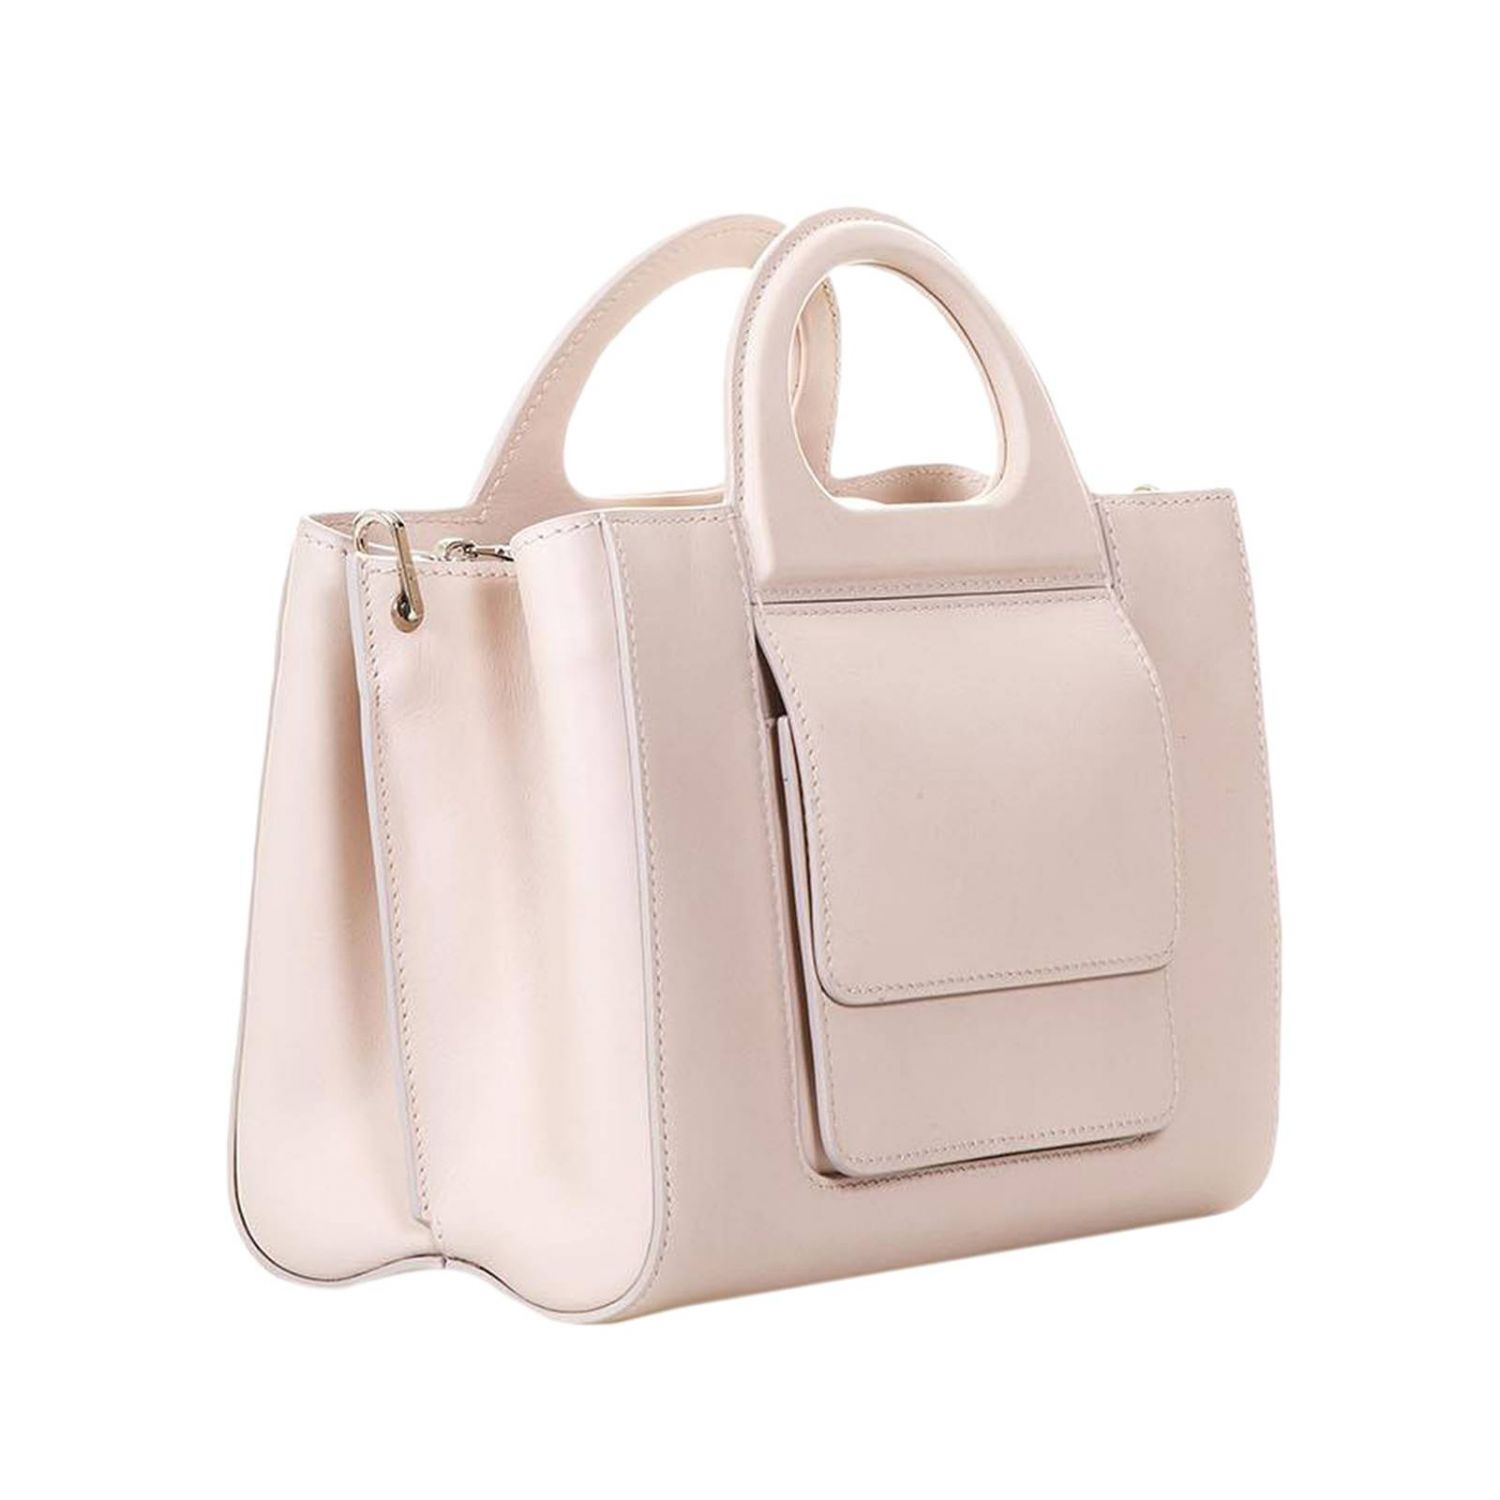 MAX MARA: Handbag women | Handbag Max Mara Women Pink | Handbag Max ...